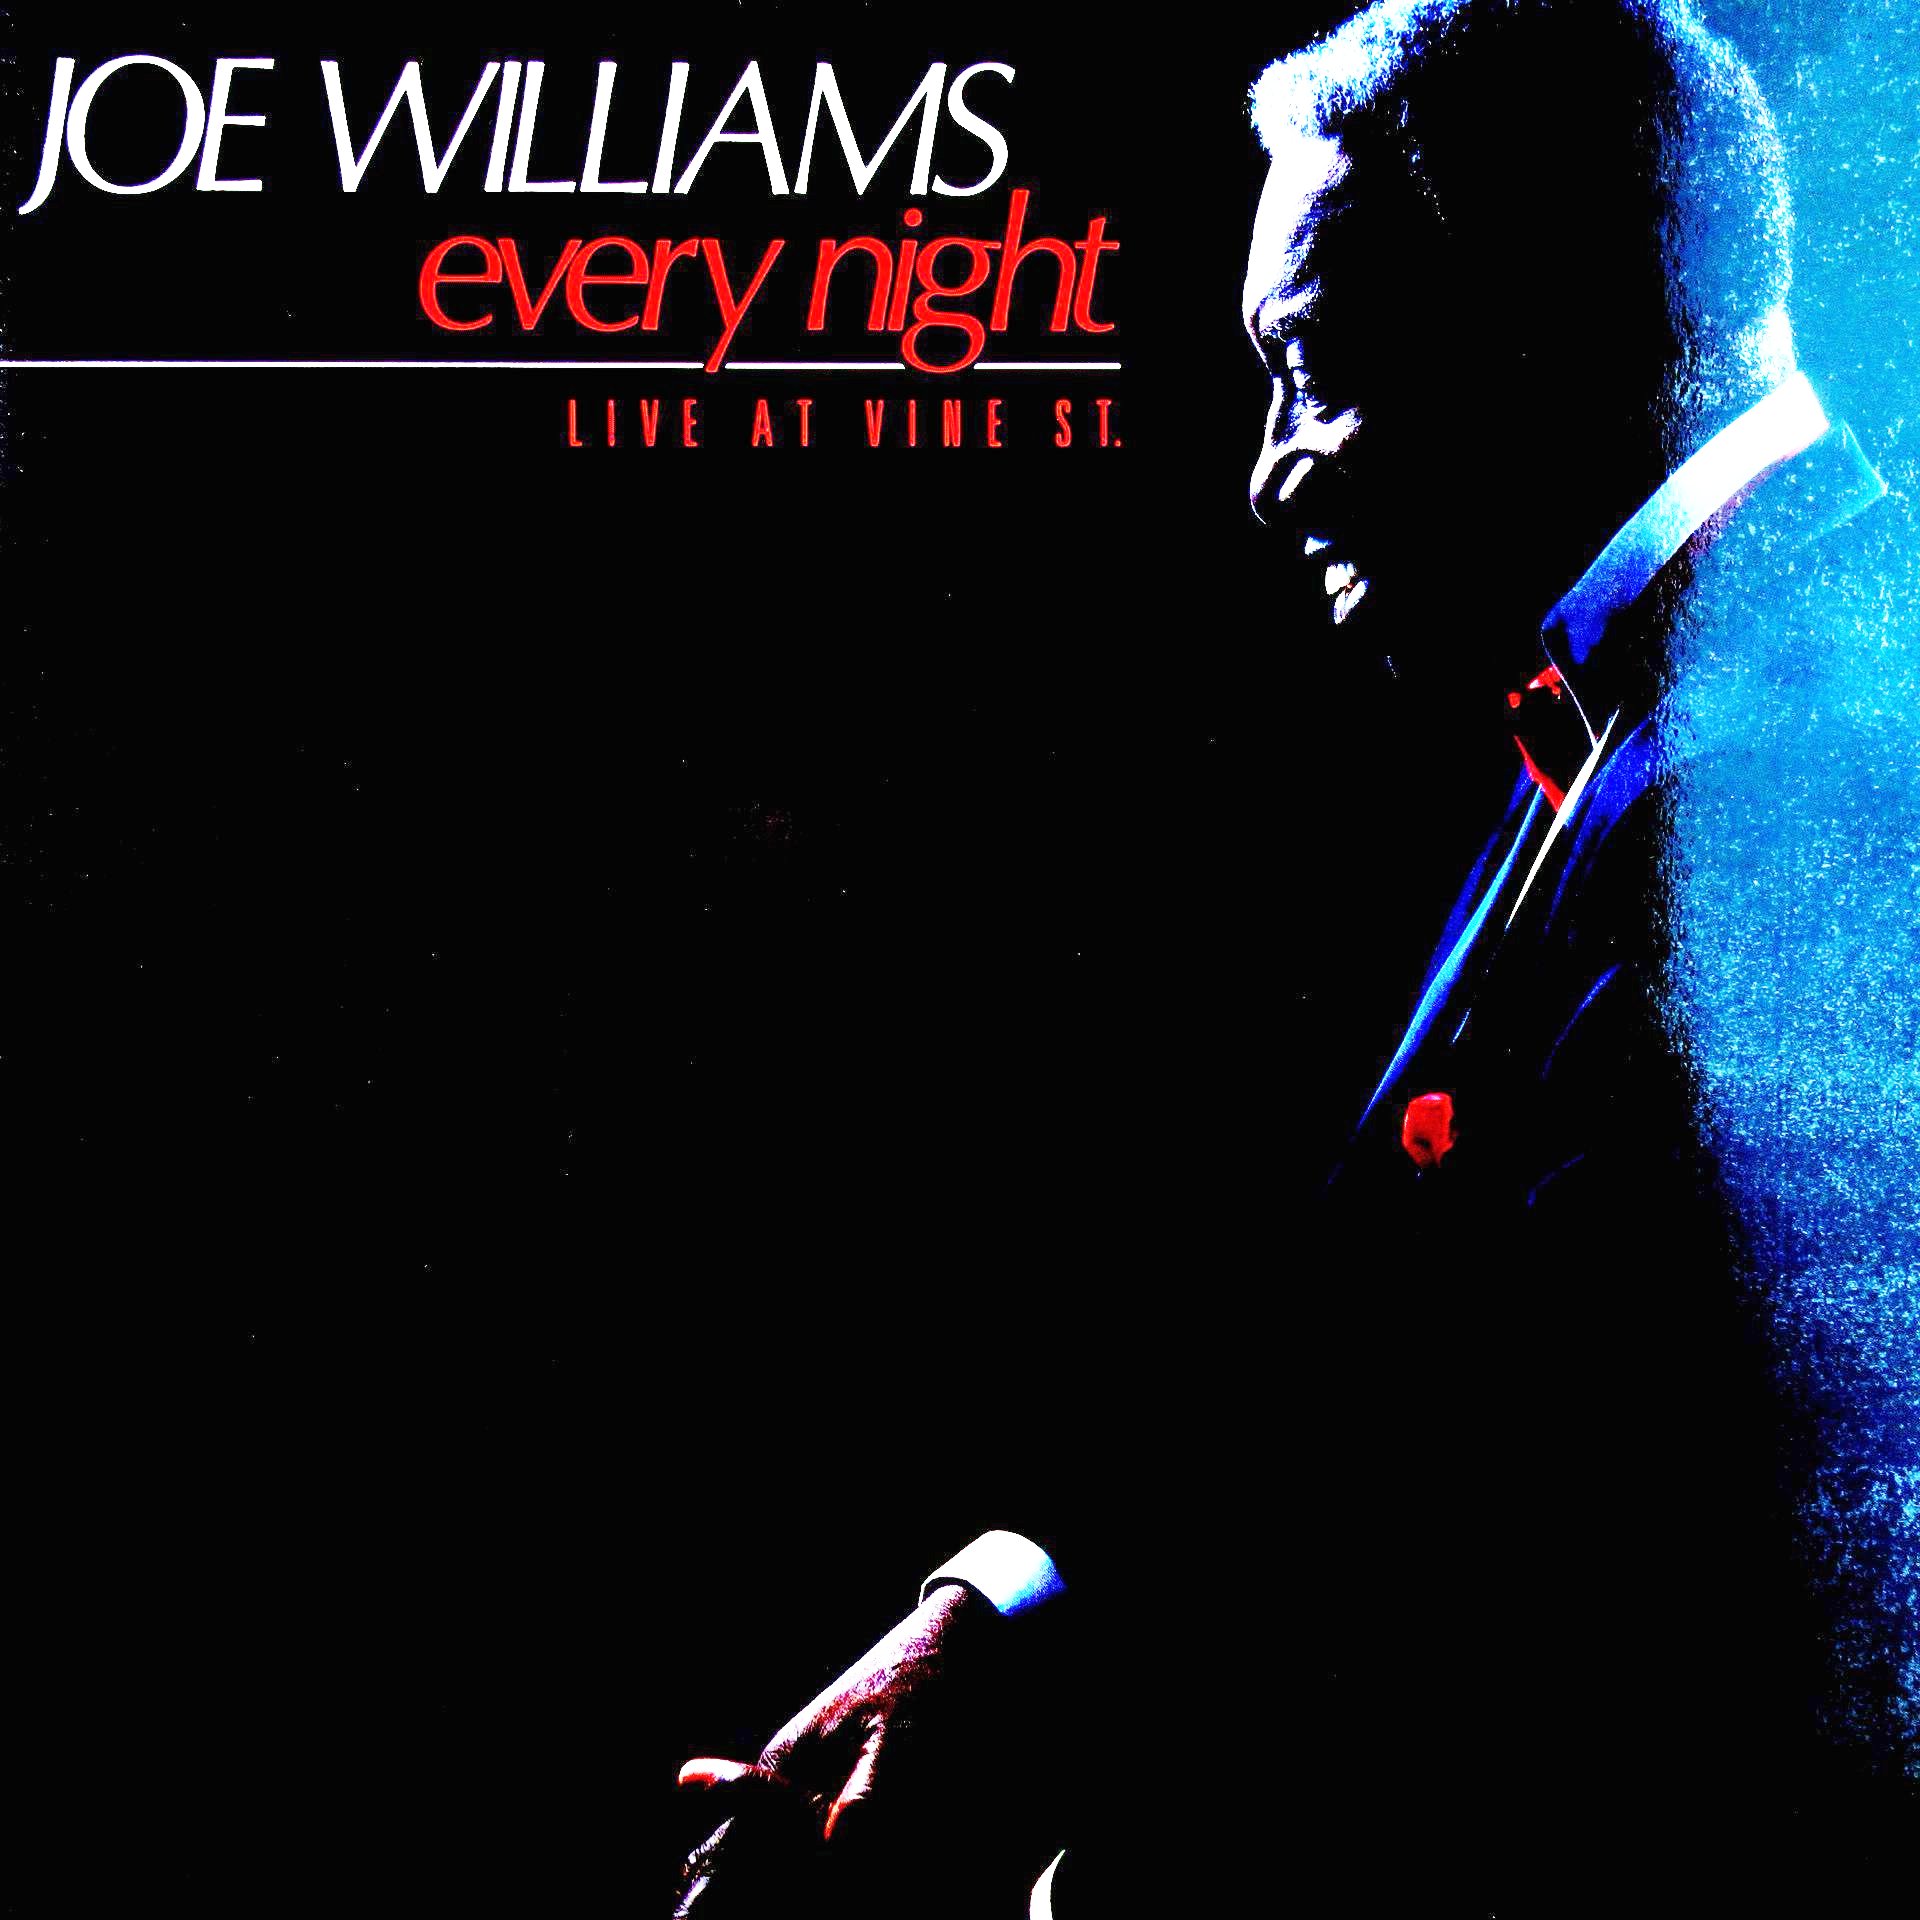 LP Joe Williams ‎– Every Night - Live At Vine St.